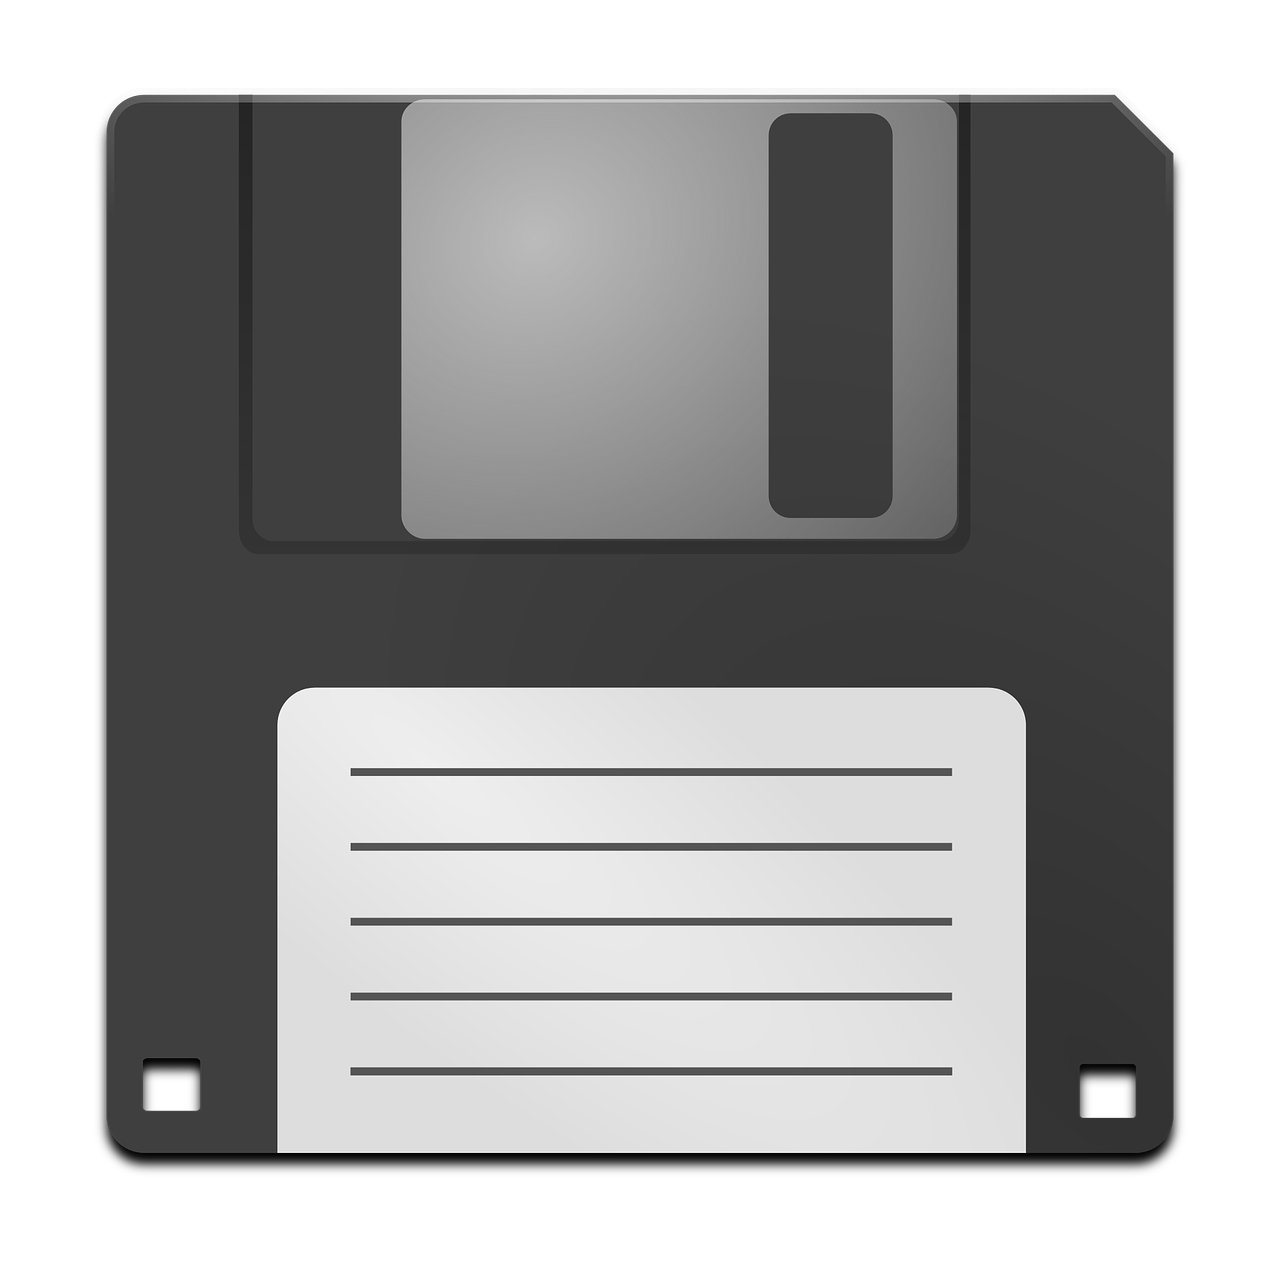 floppy icons matt free photo